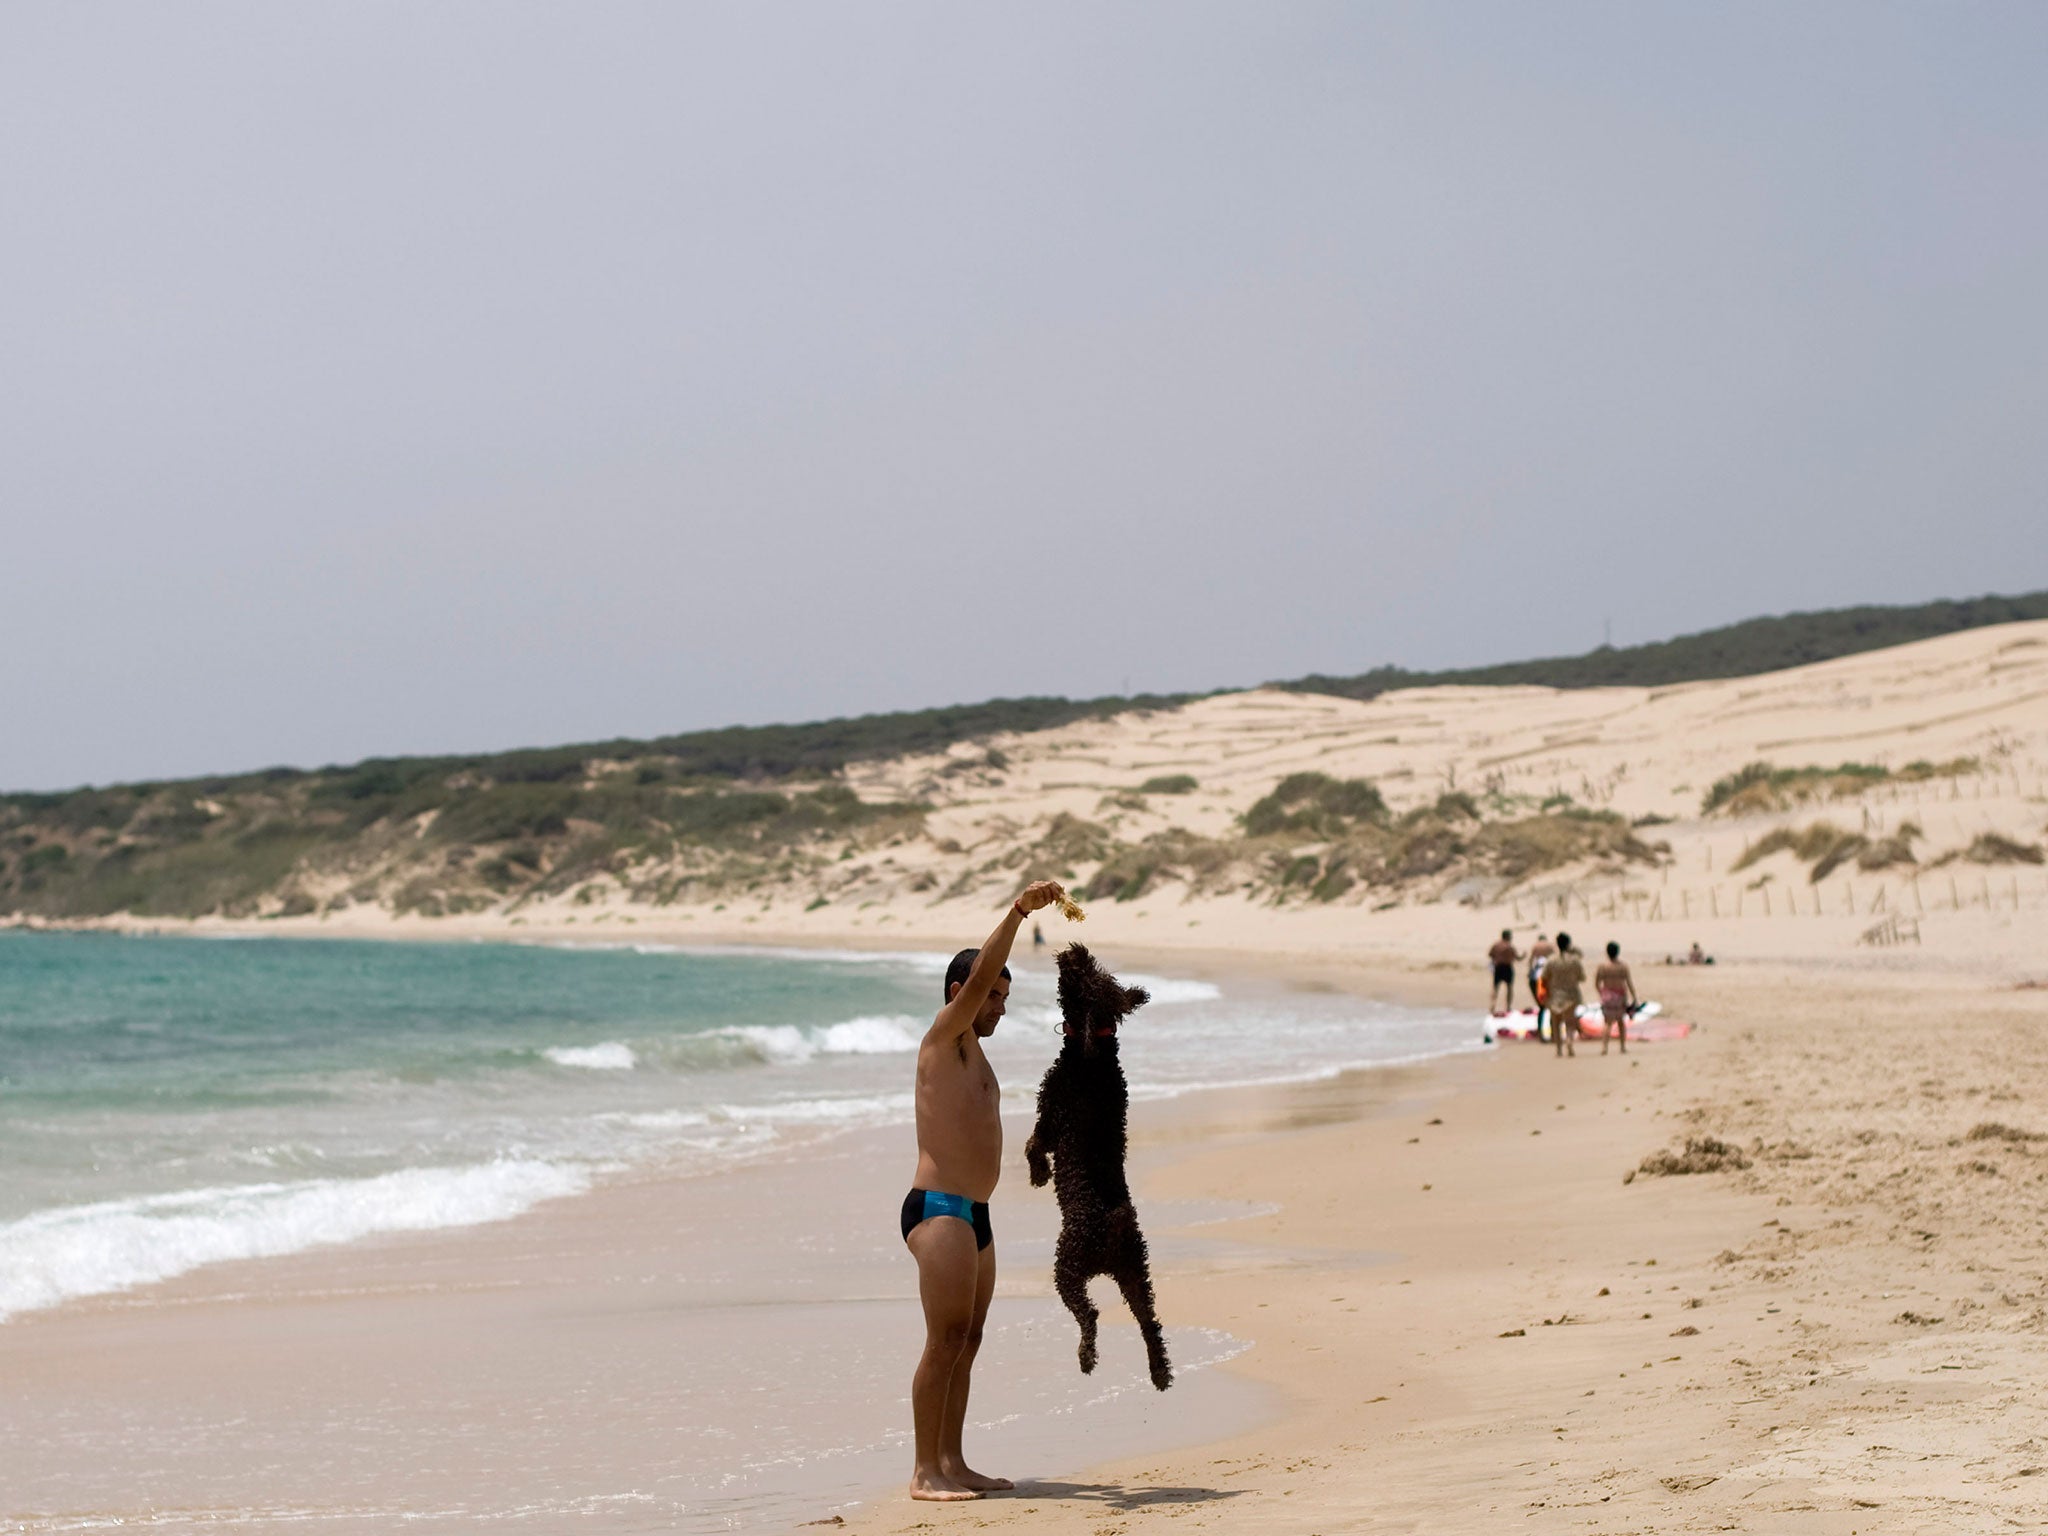 A man plays with his dog at the Valdevaqueros beach in Tarifa, near Cadiz